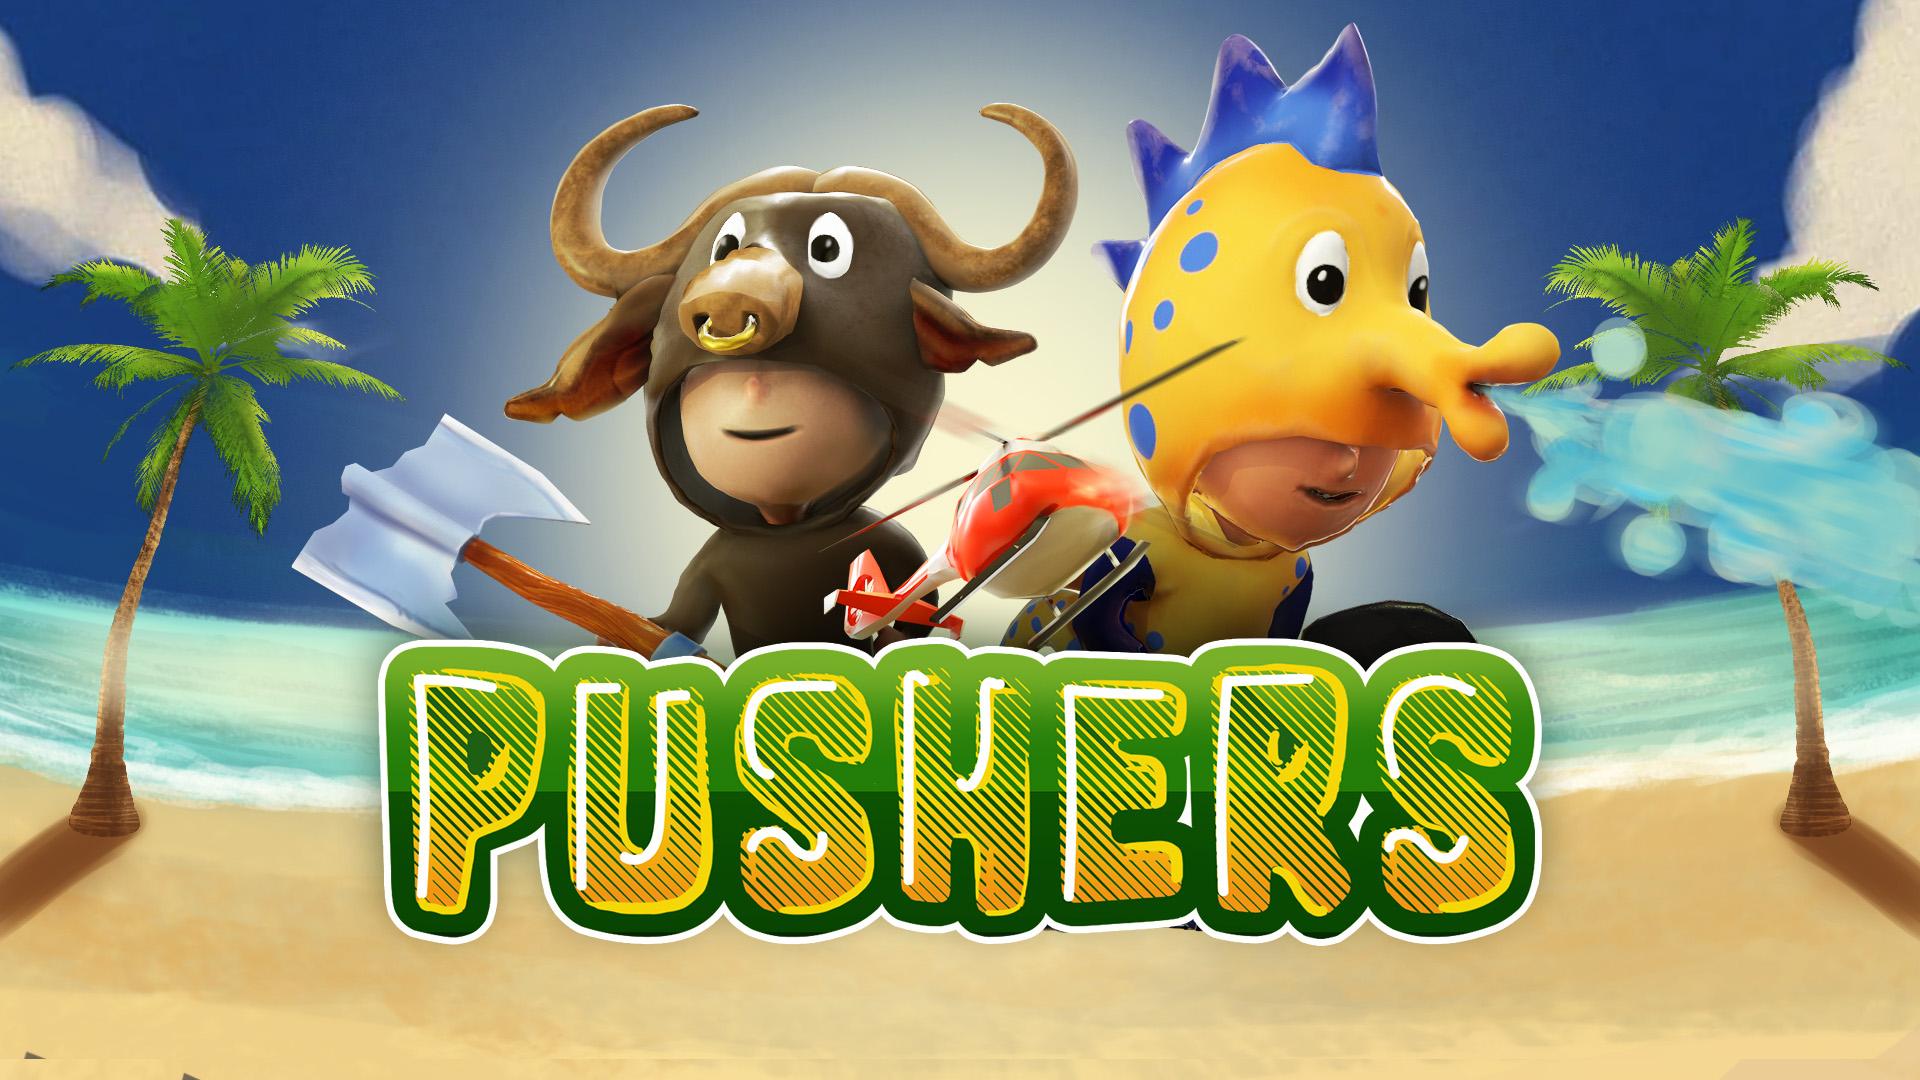 Pushers